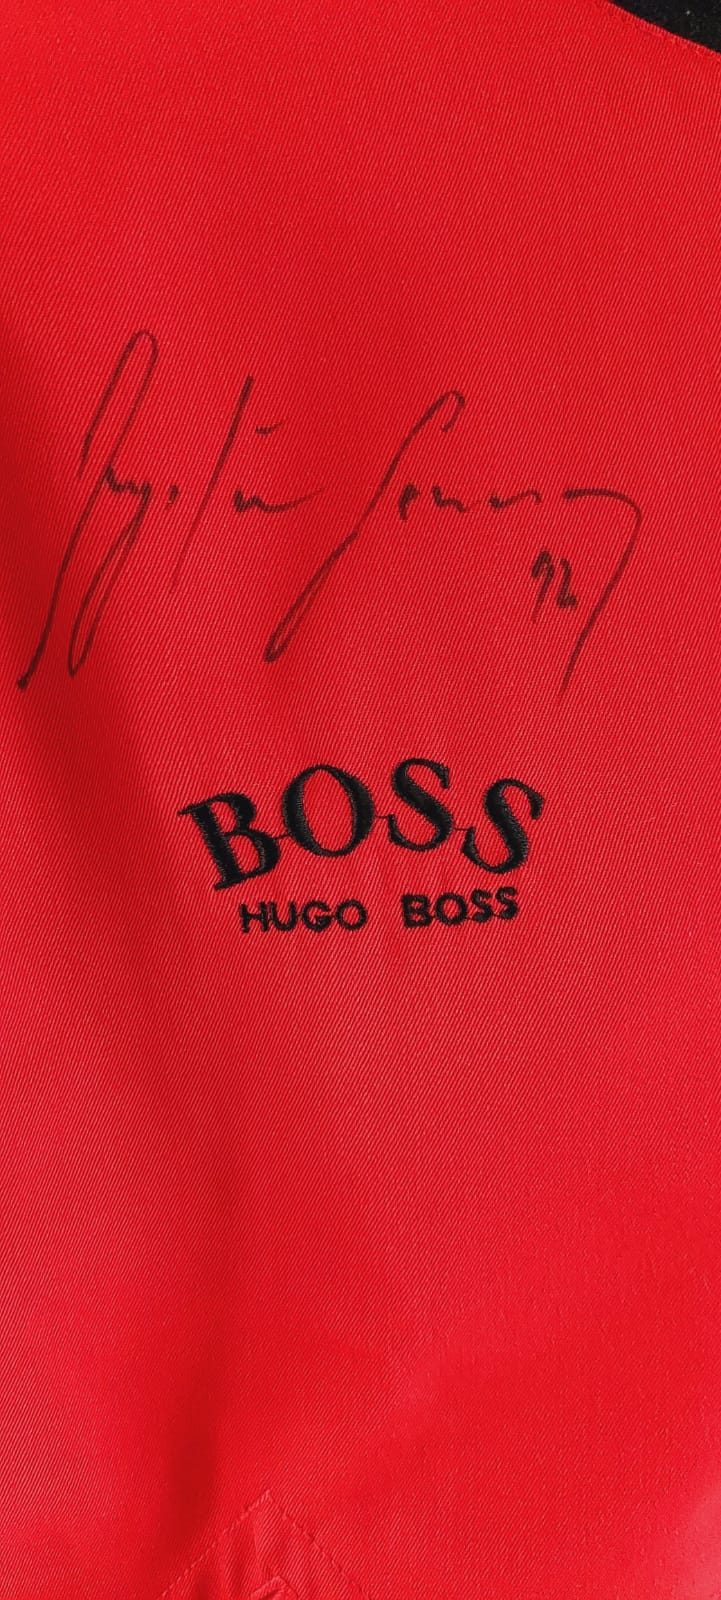 1992 Ayrton Senna Hugo Boss worn jacket signed